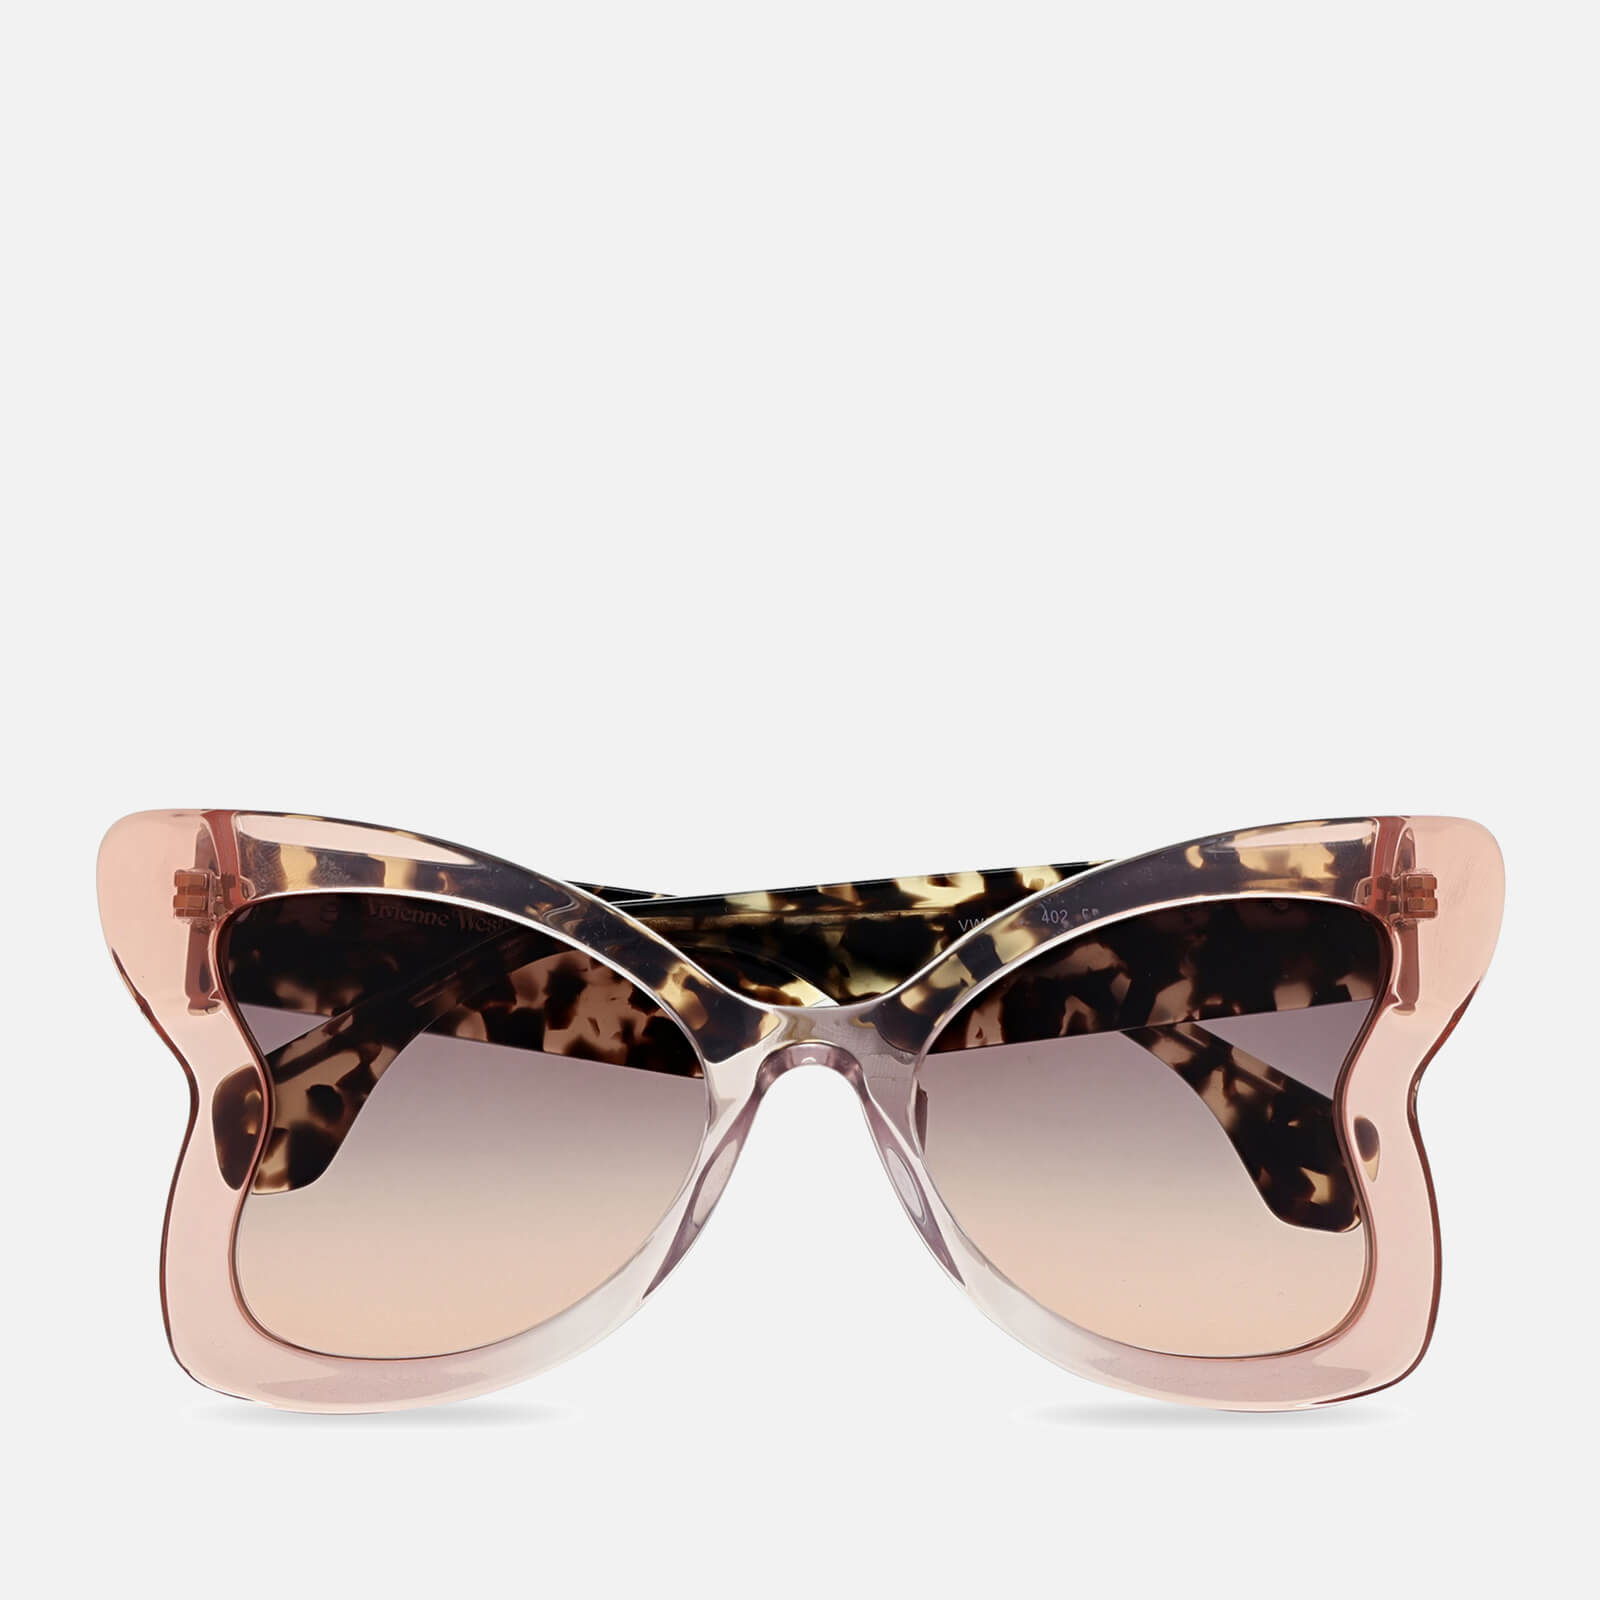 Vivienne Westwood Athalia Acetate Oversized Sunglasses von Vivienne Westwood